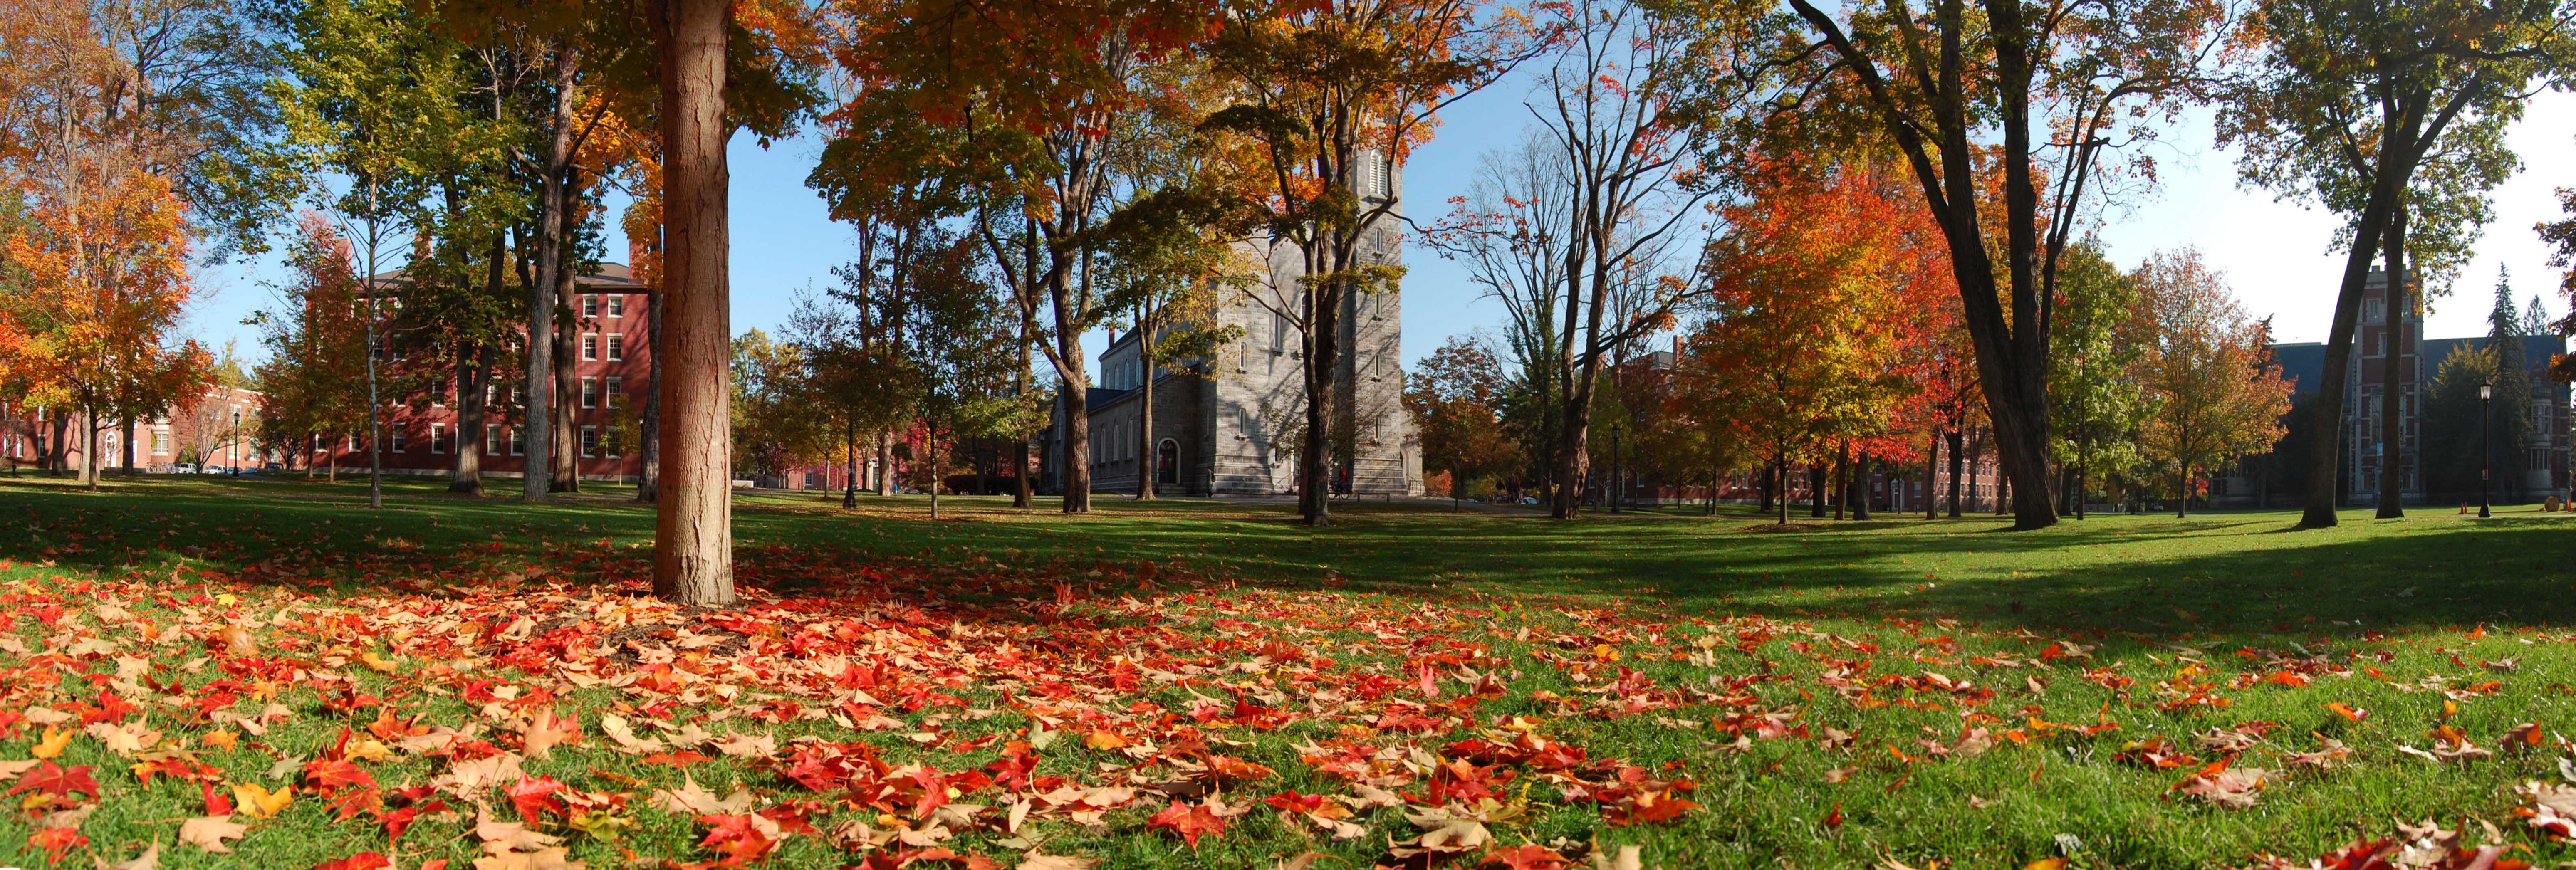 Bowdoin College Quad in the fall. Photo courtesy of Wikimedia Commons.